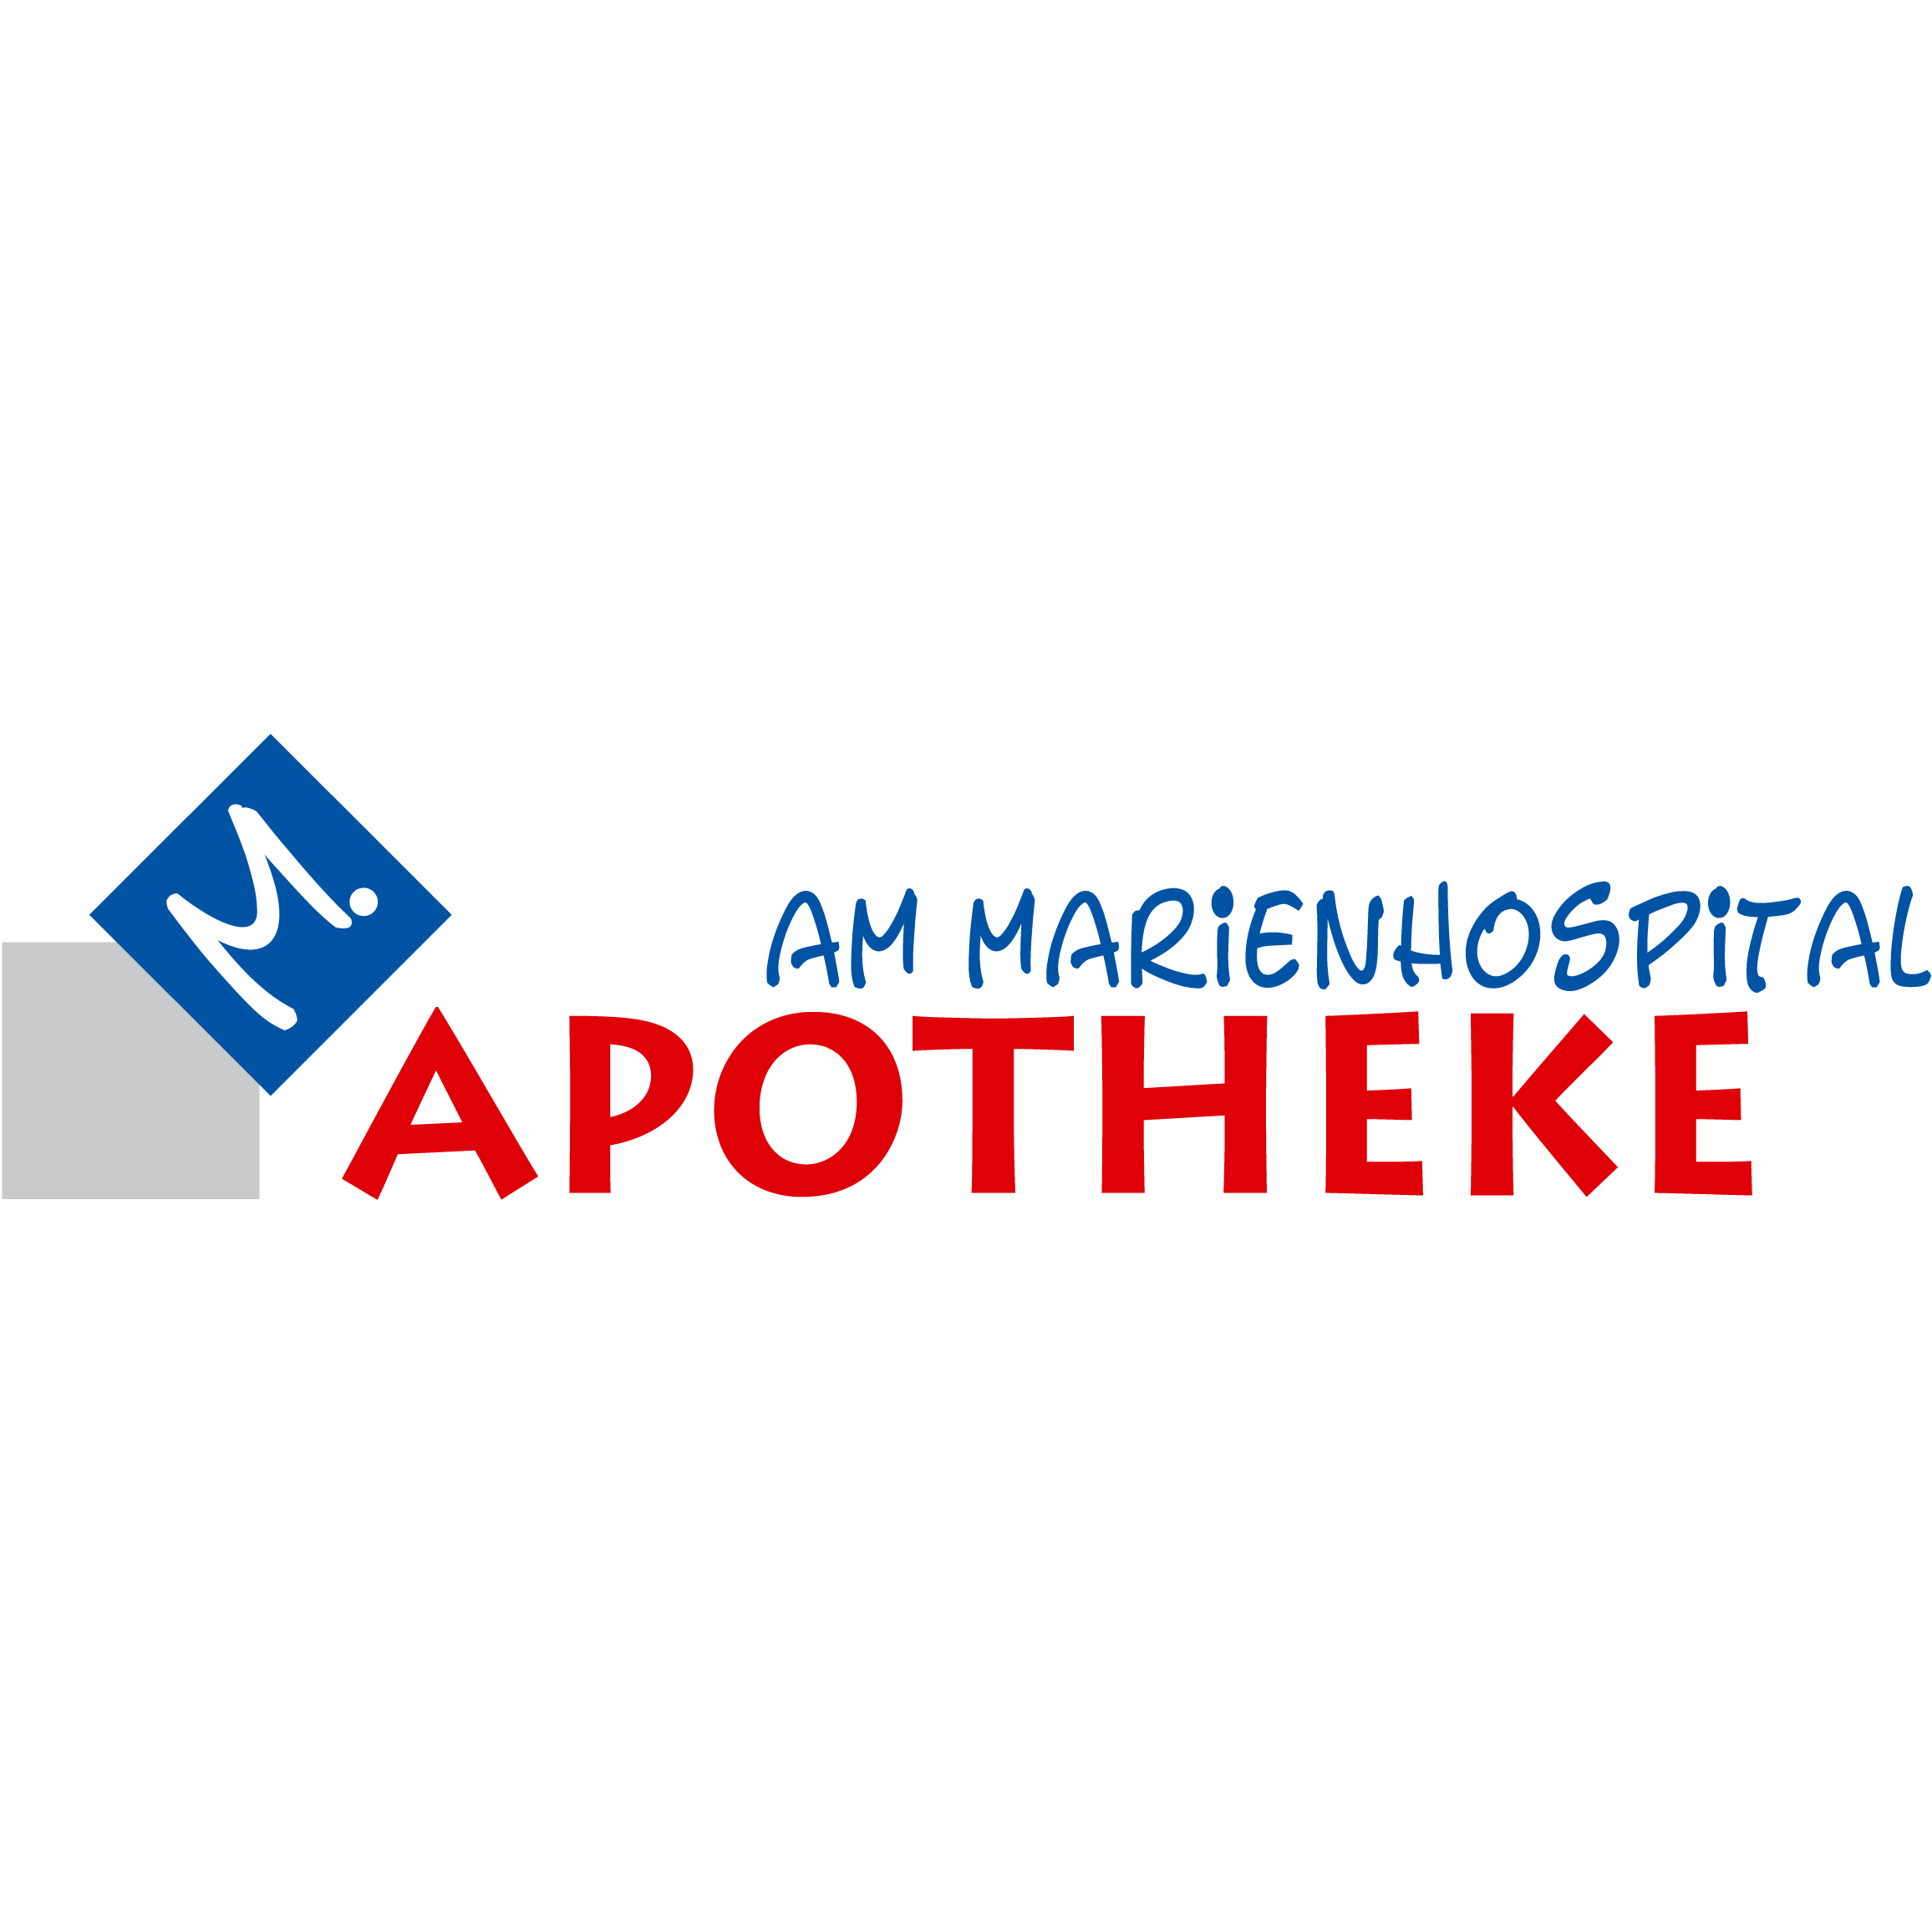 Apotheke am Marienhospital Logo